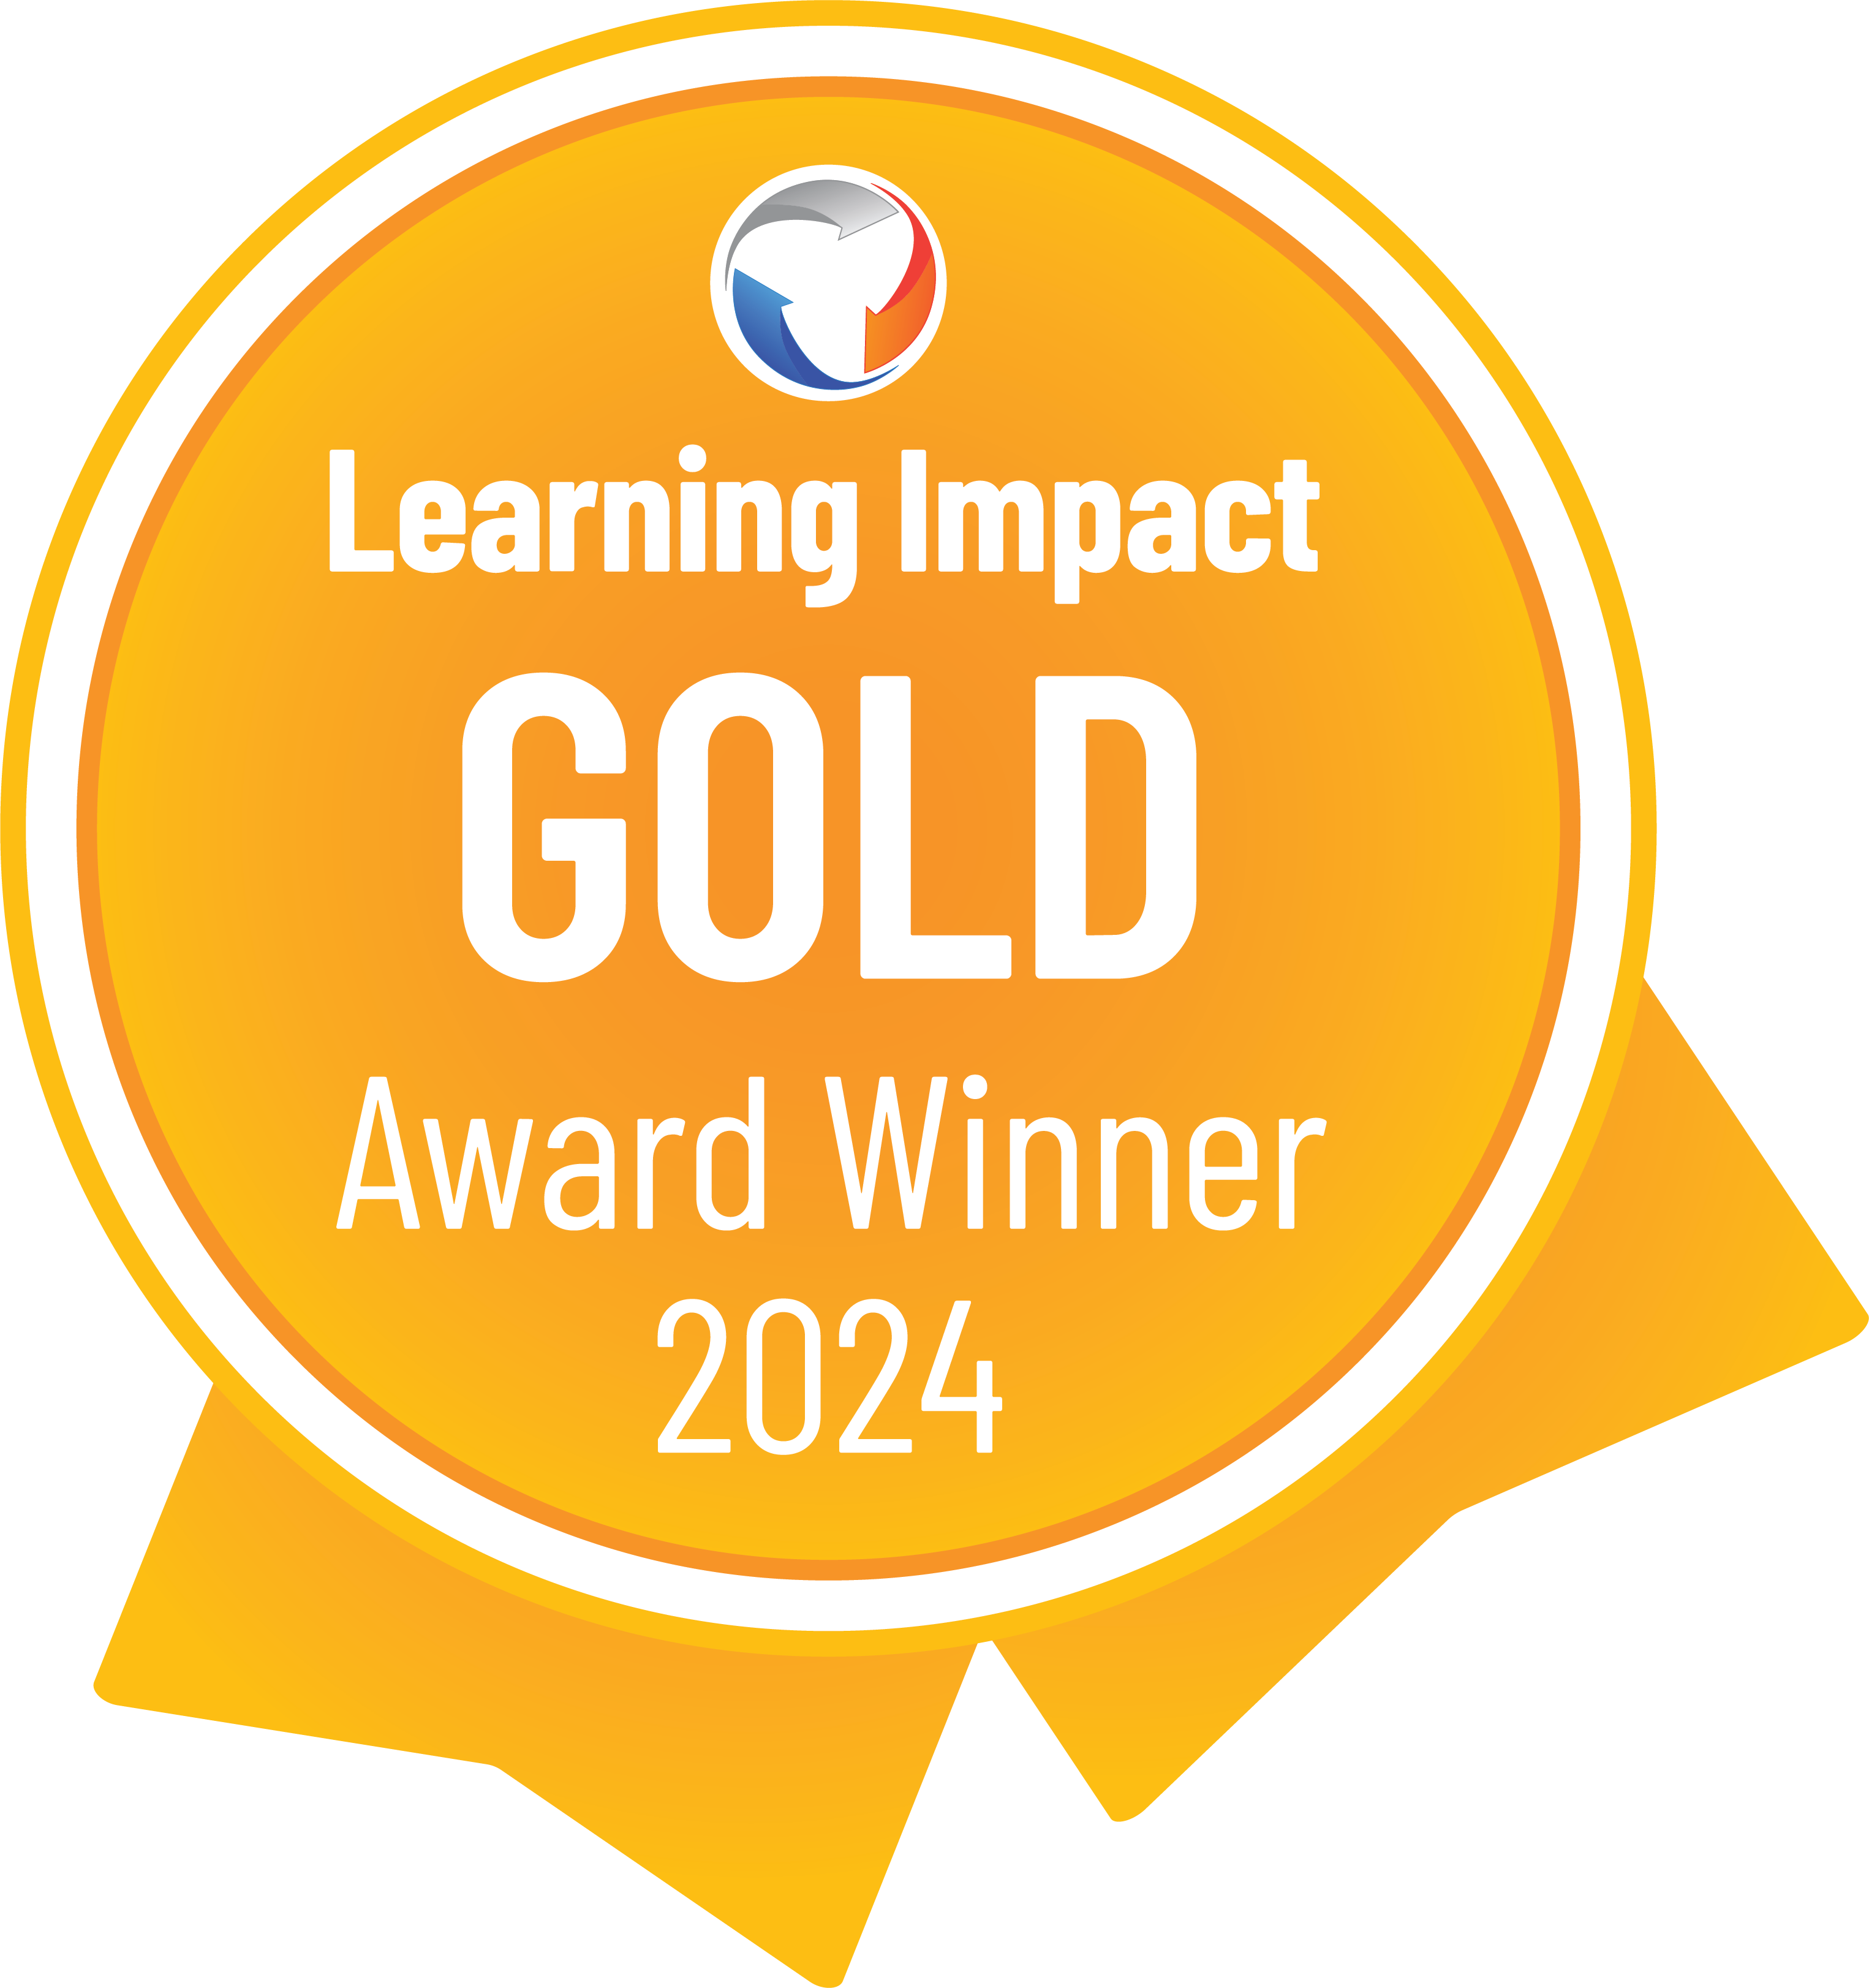 Learning Impact Gold Award